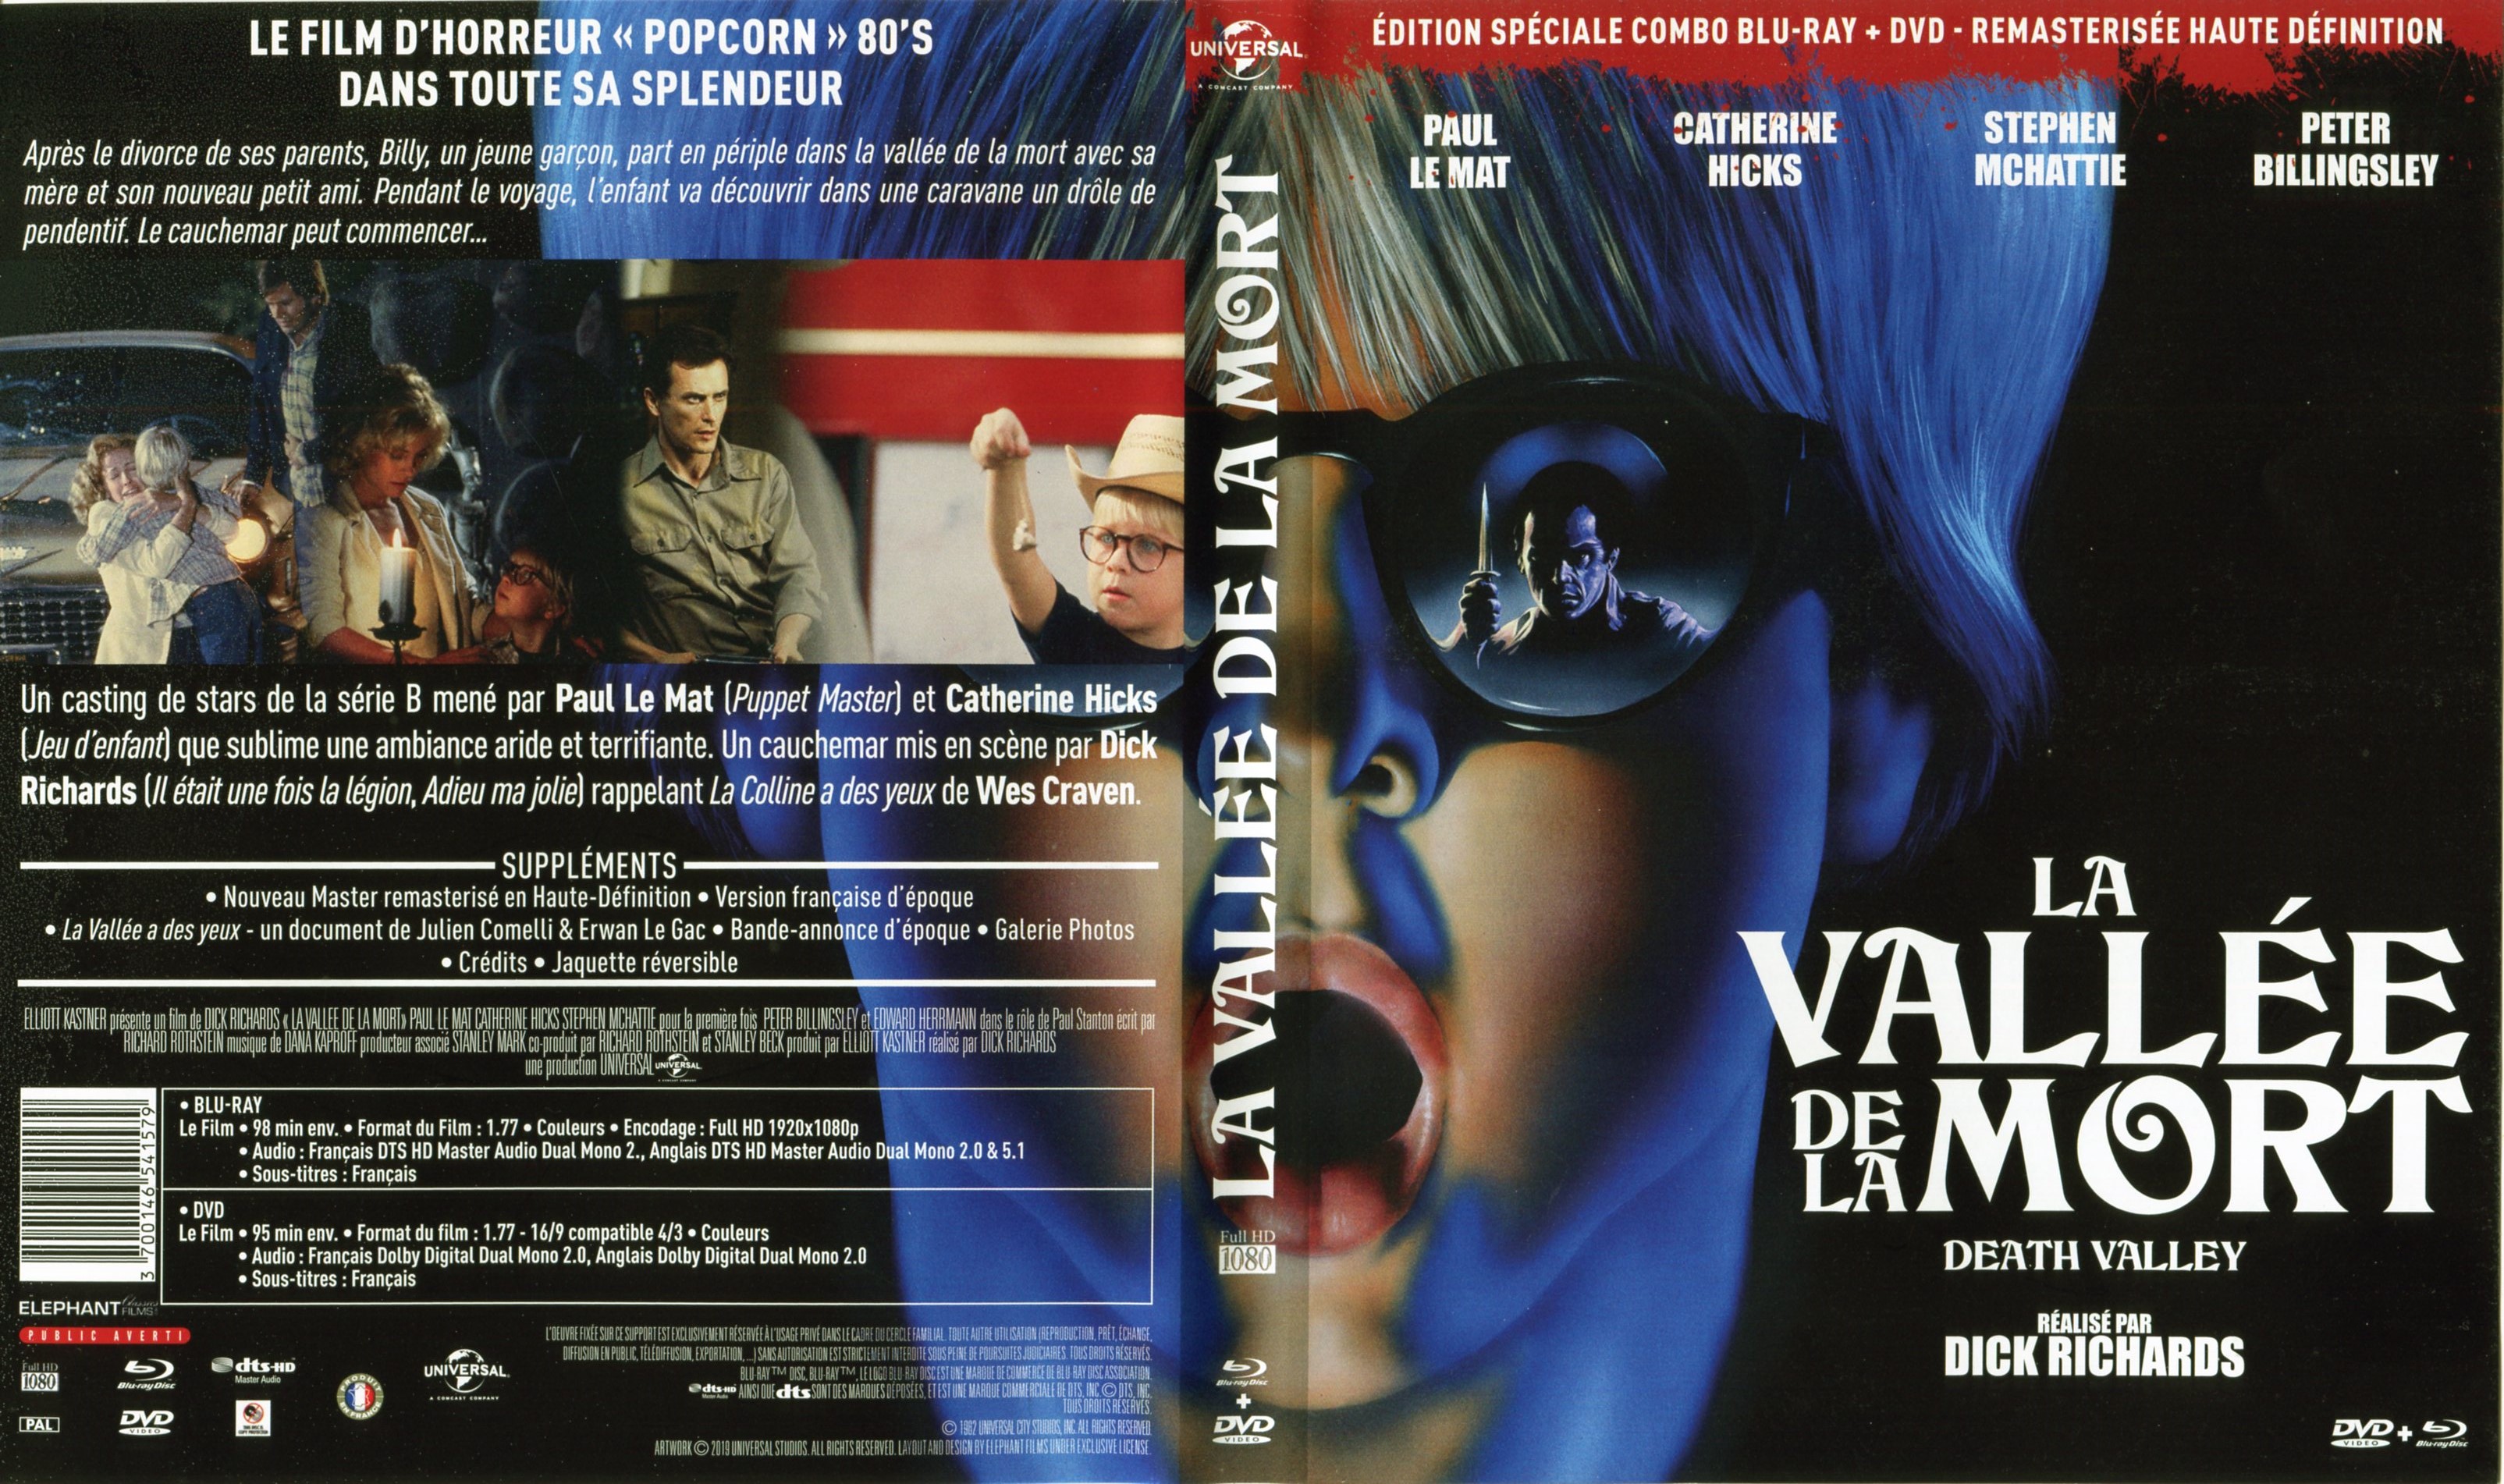 Jaquette DVD La valle de la mort (BLU-RAY)